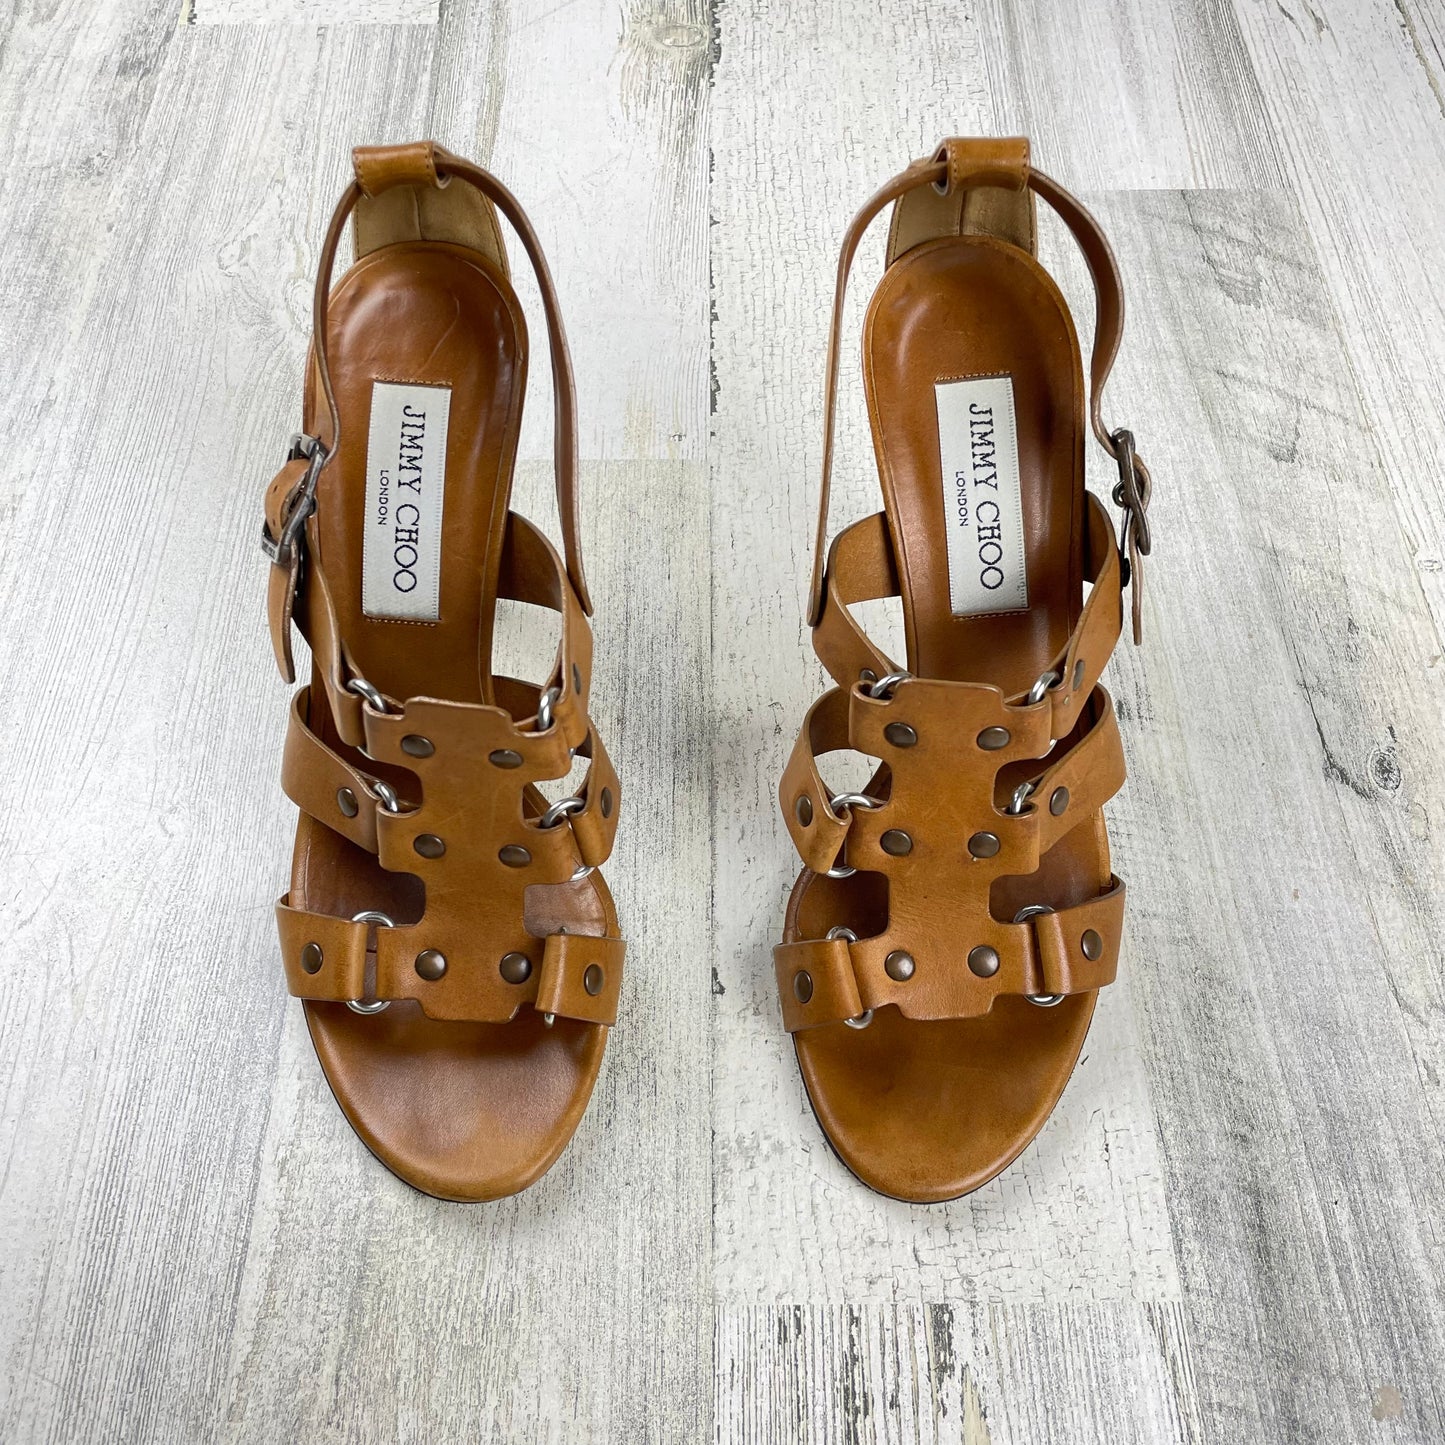 Sandals Designer By Jimmy Choo  Size: 7.5